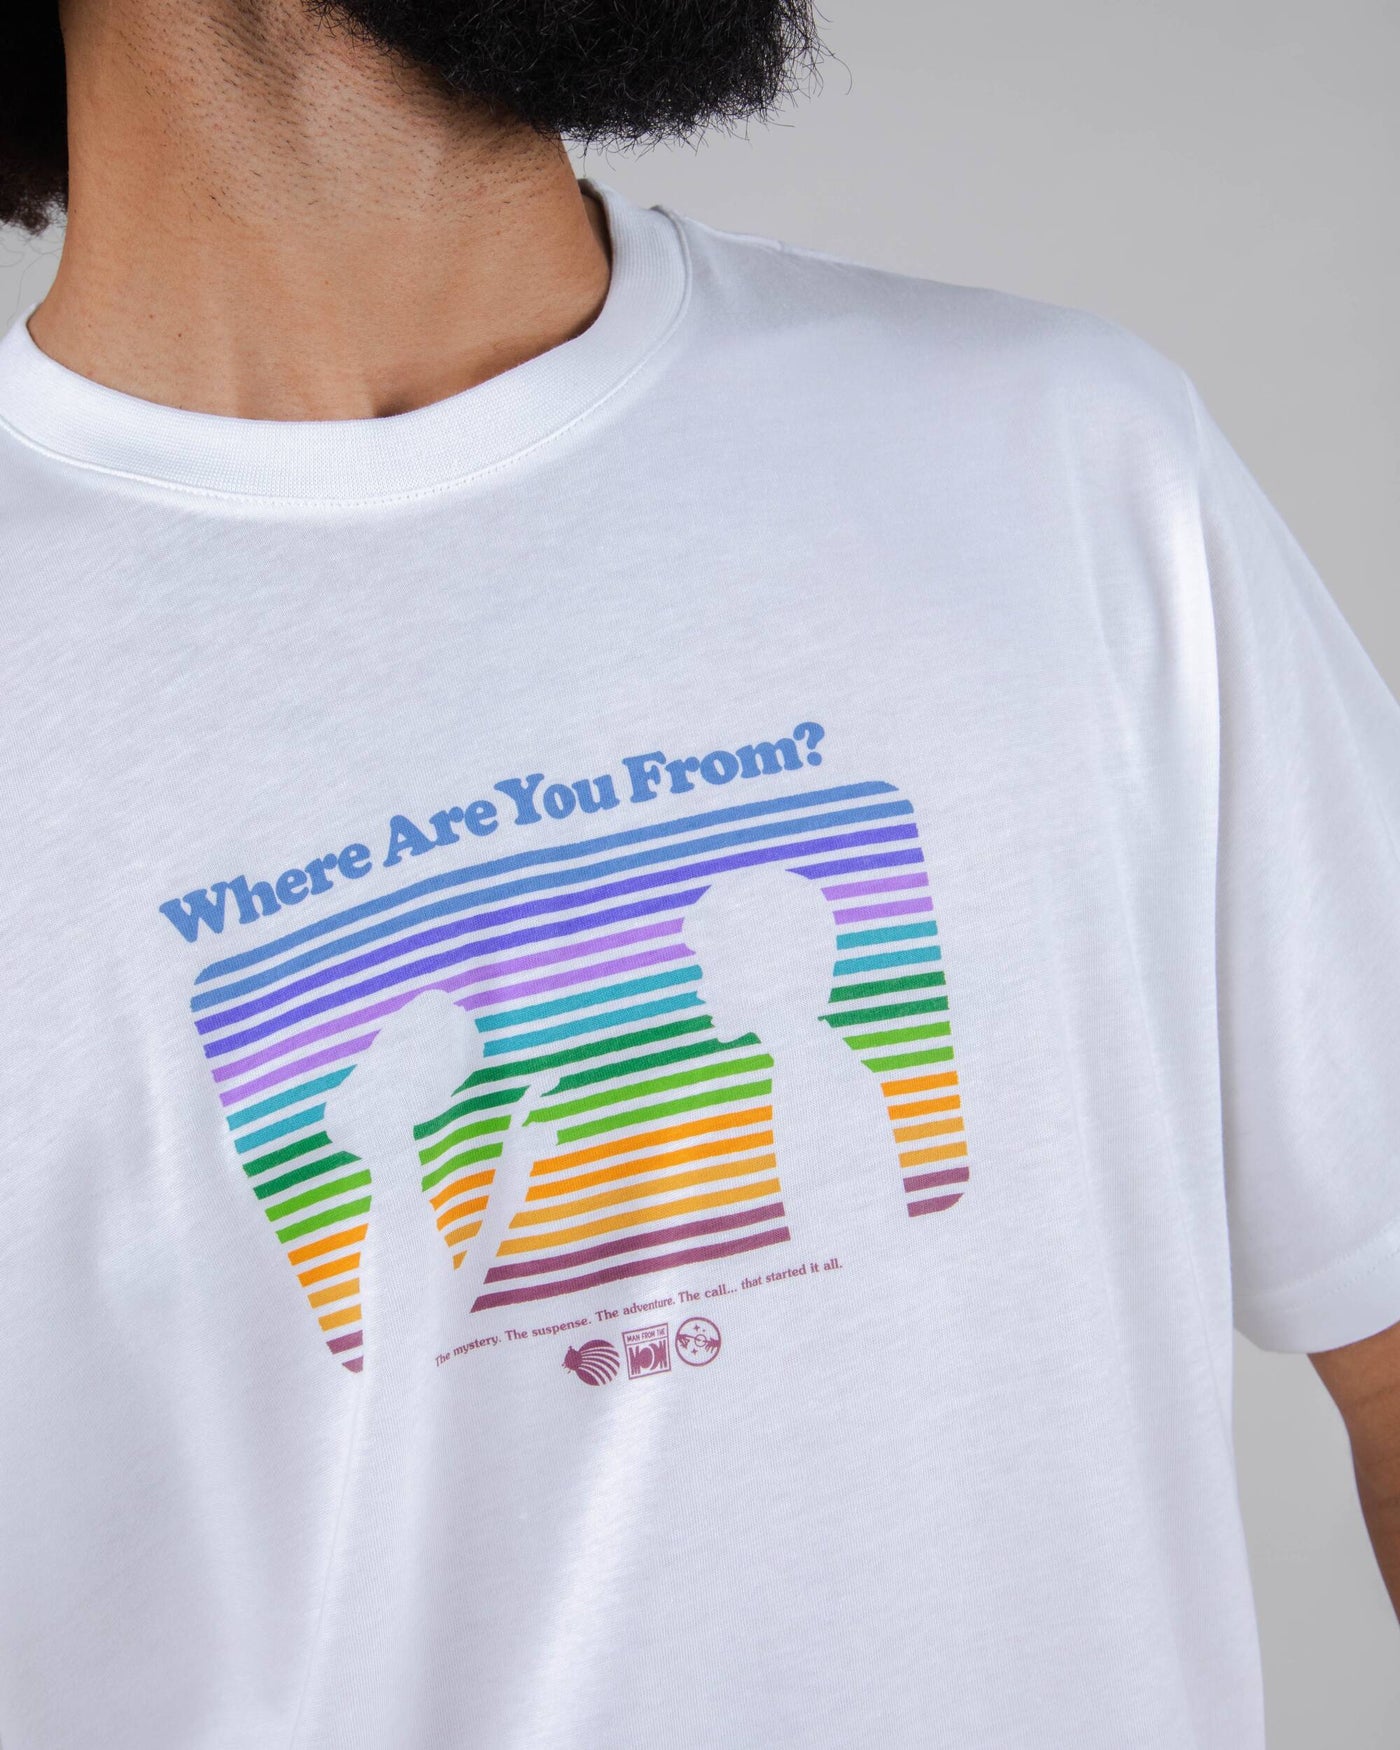 Camiseta Brava E.T. Where Are You From?